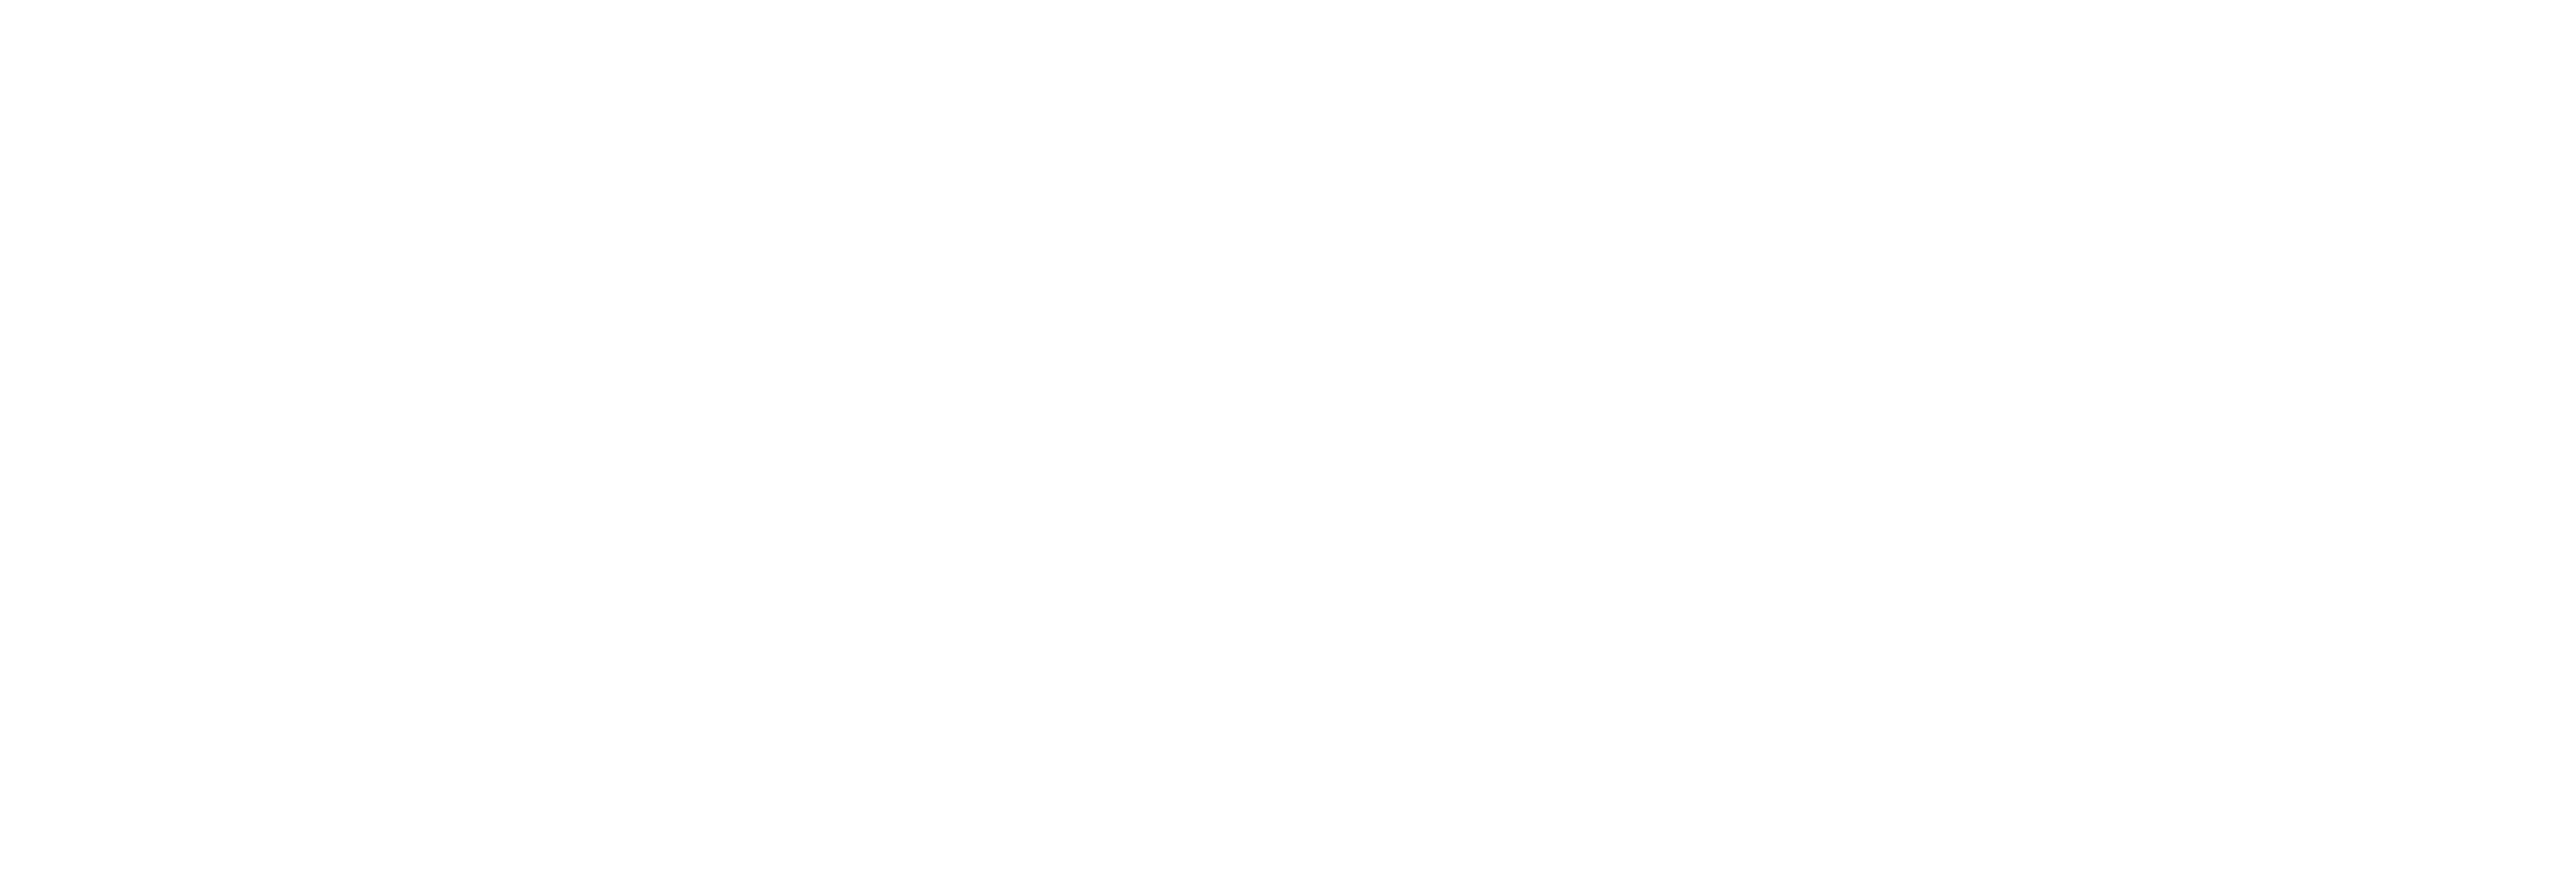 BSI_ISO_9001